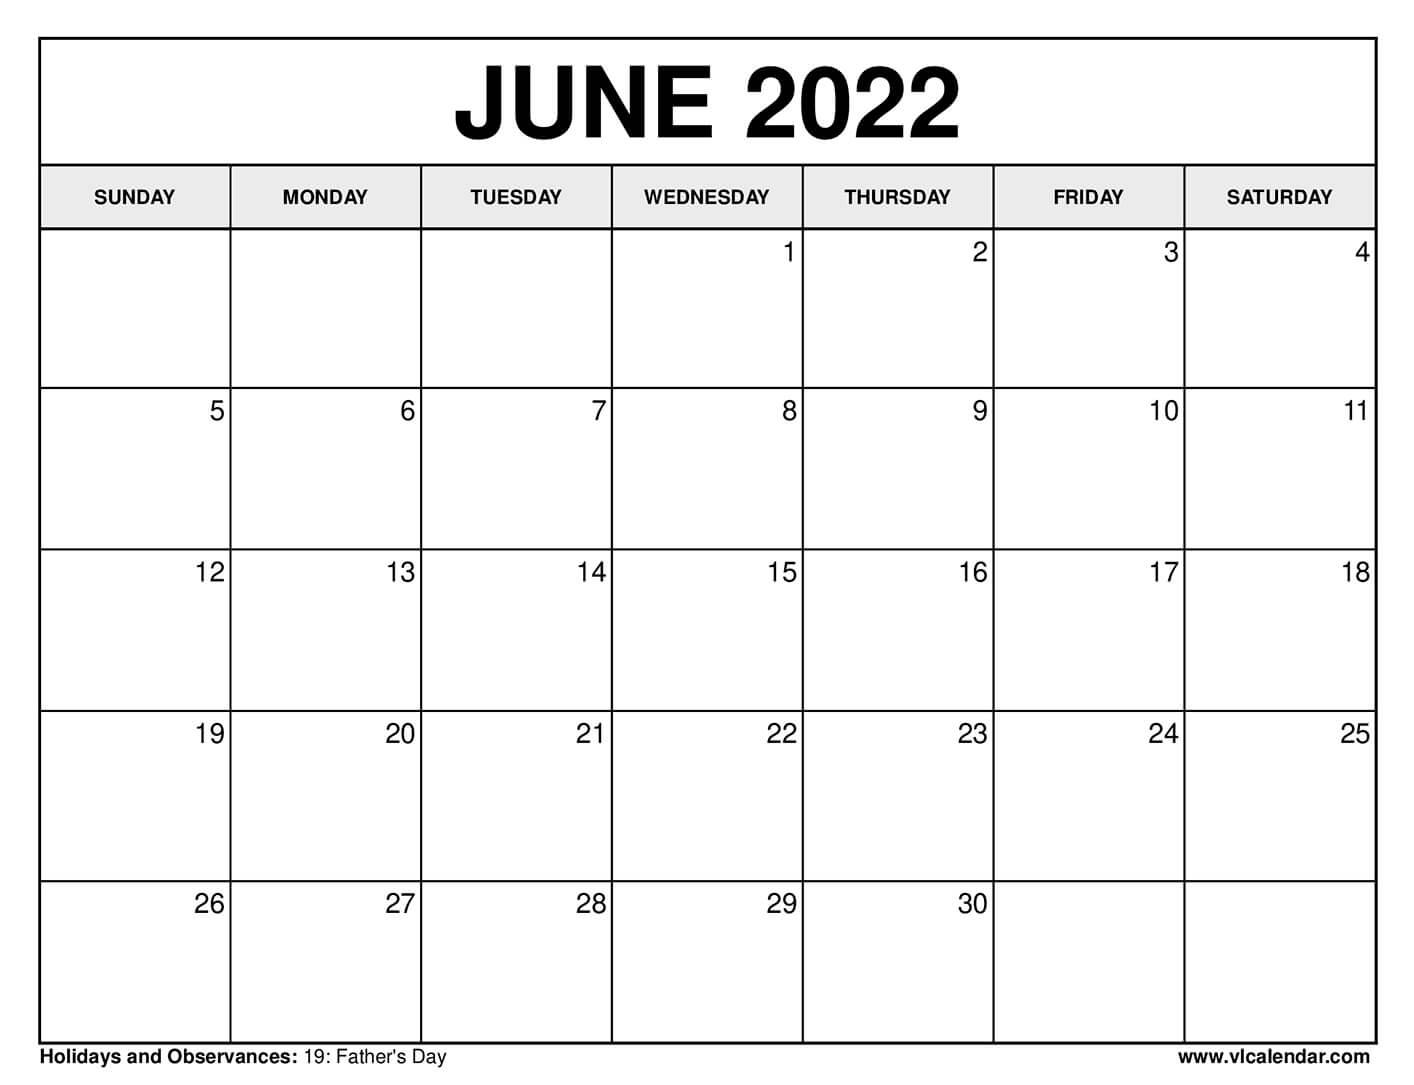 June 2022 Calendar With Holidays Printable June 2022 Calendar Templates With Holidays - Vl Calendar